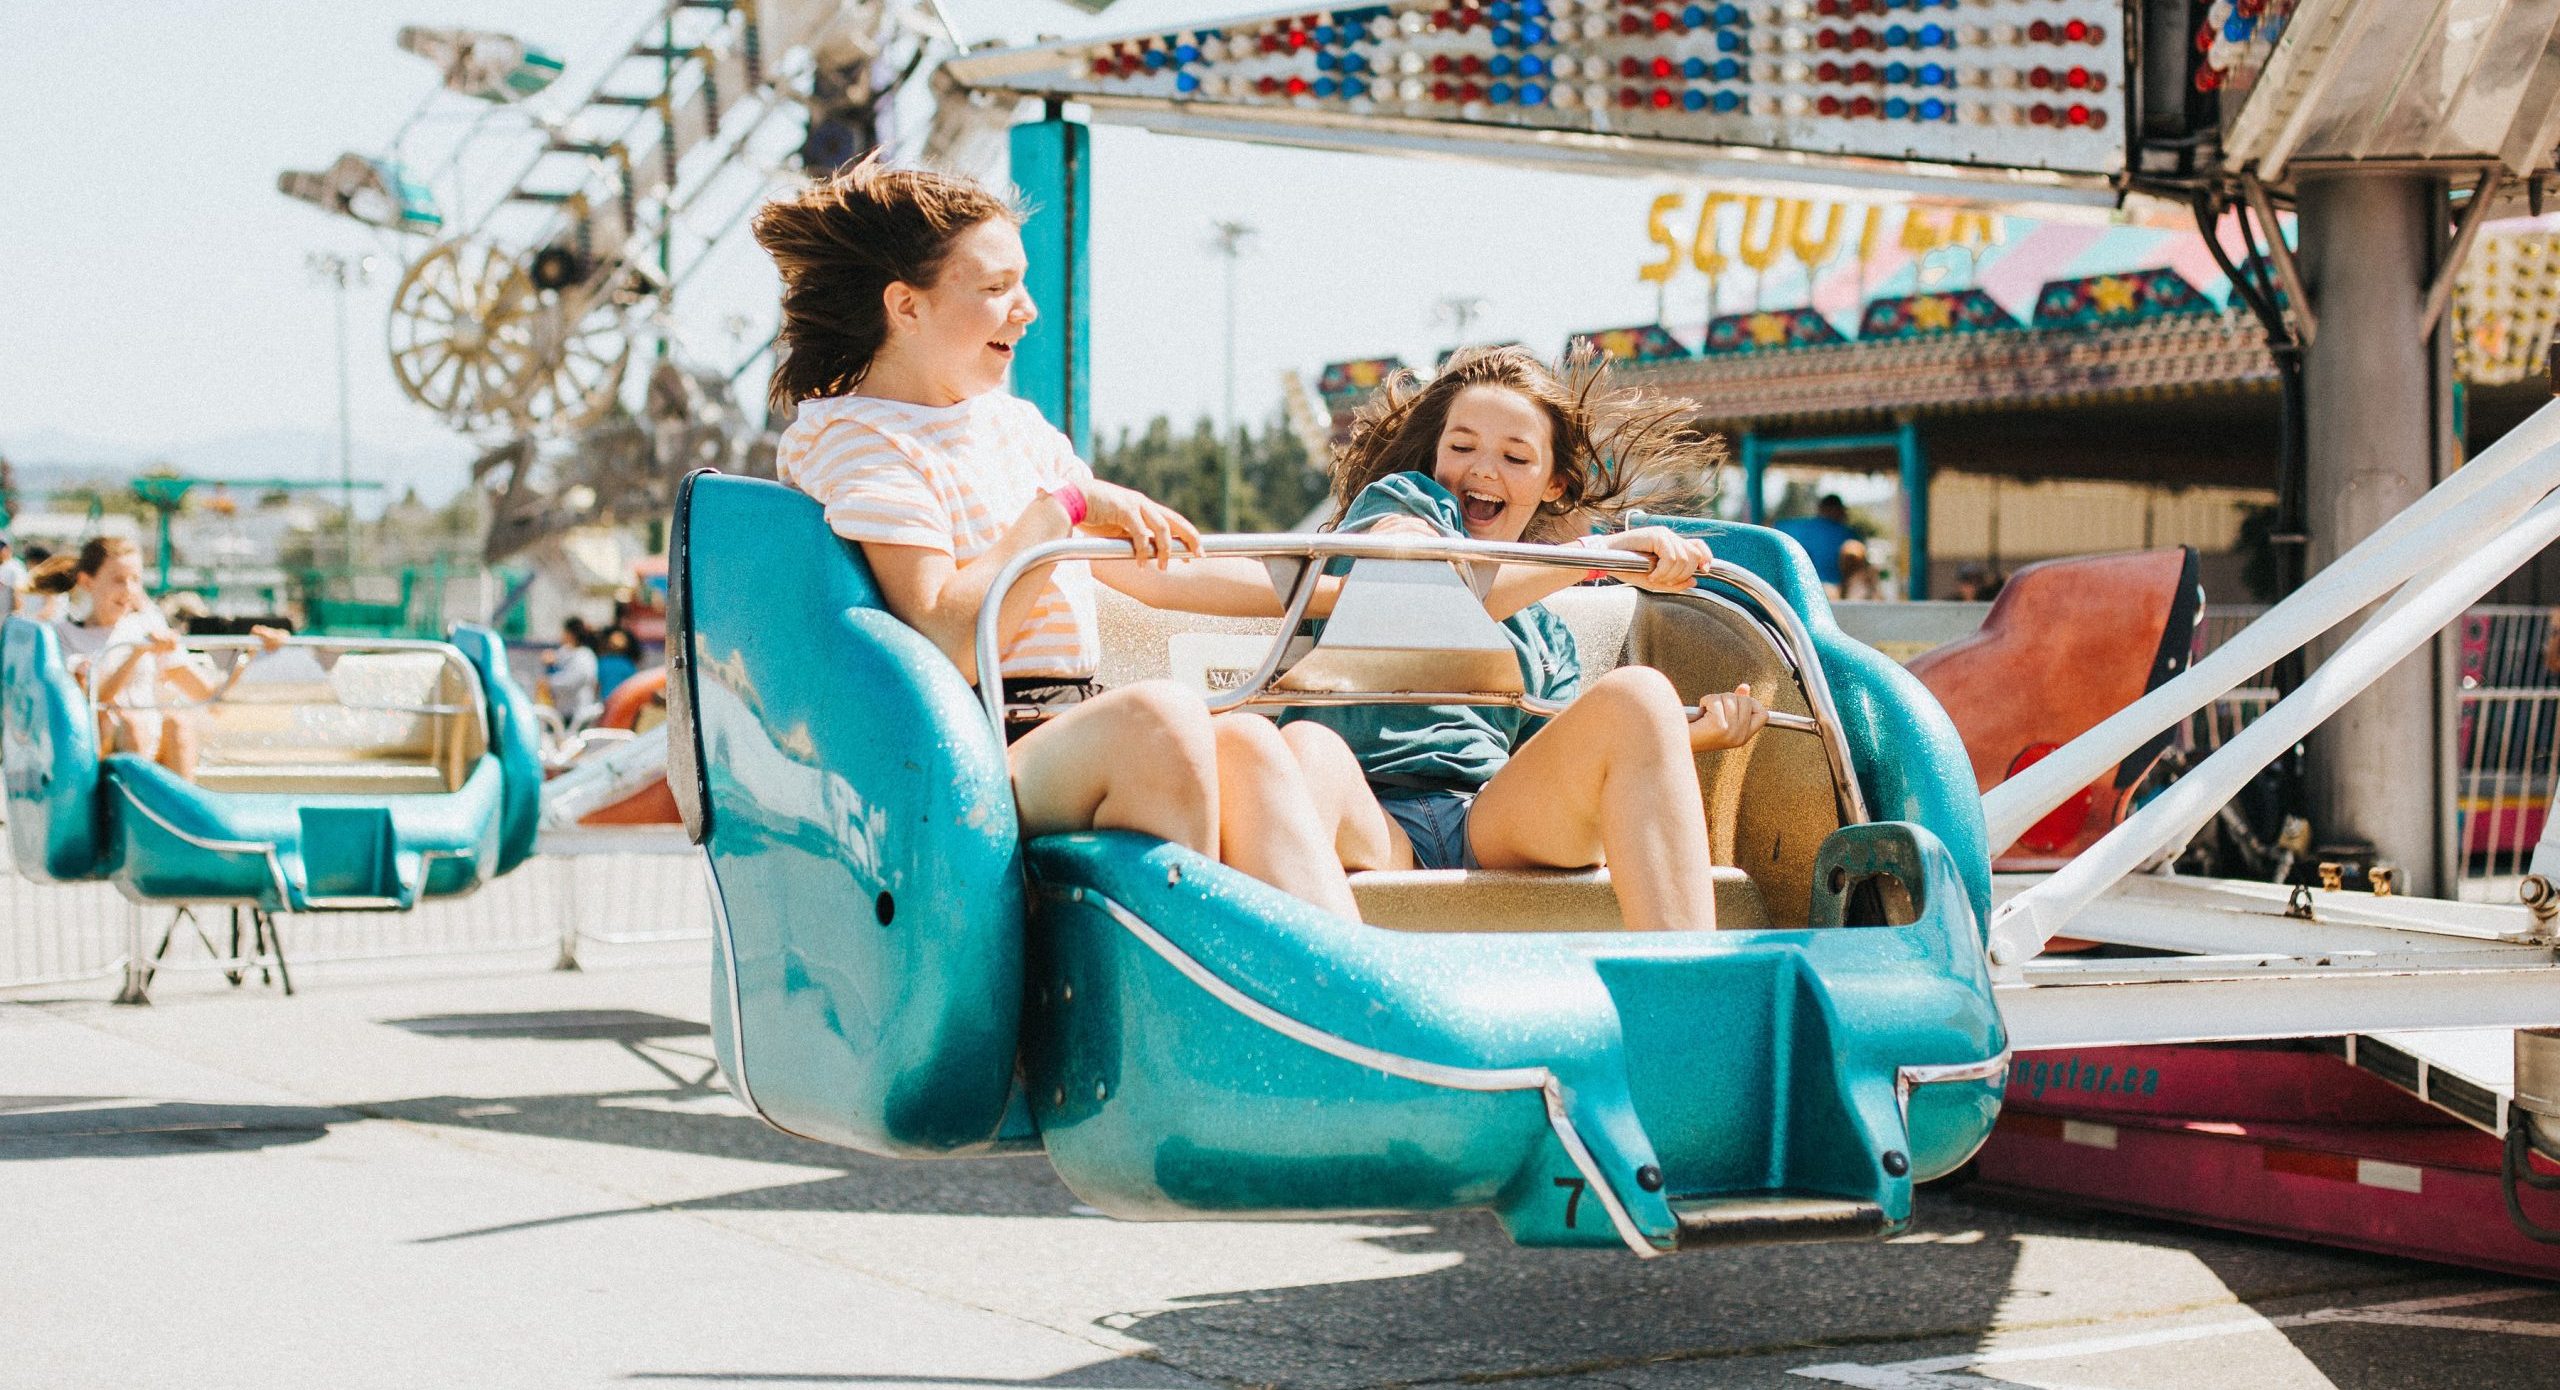 2 young girls riding an amusement park ride